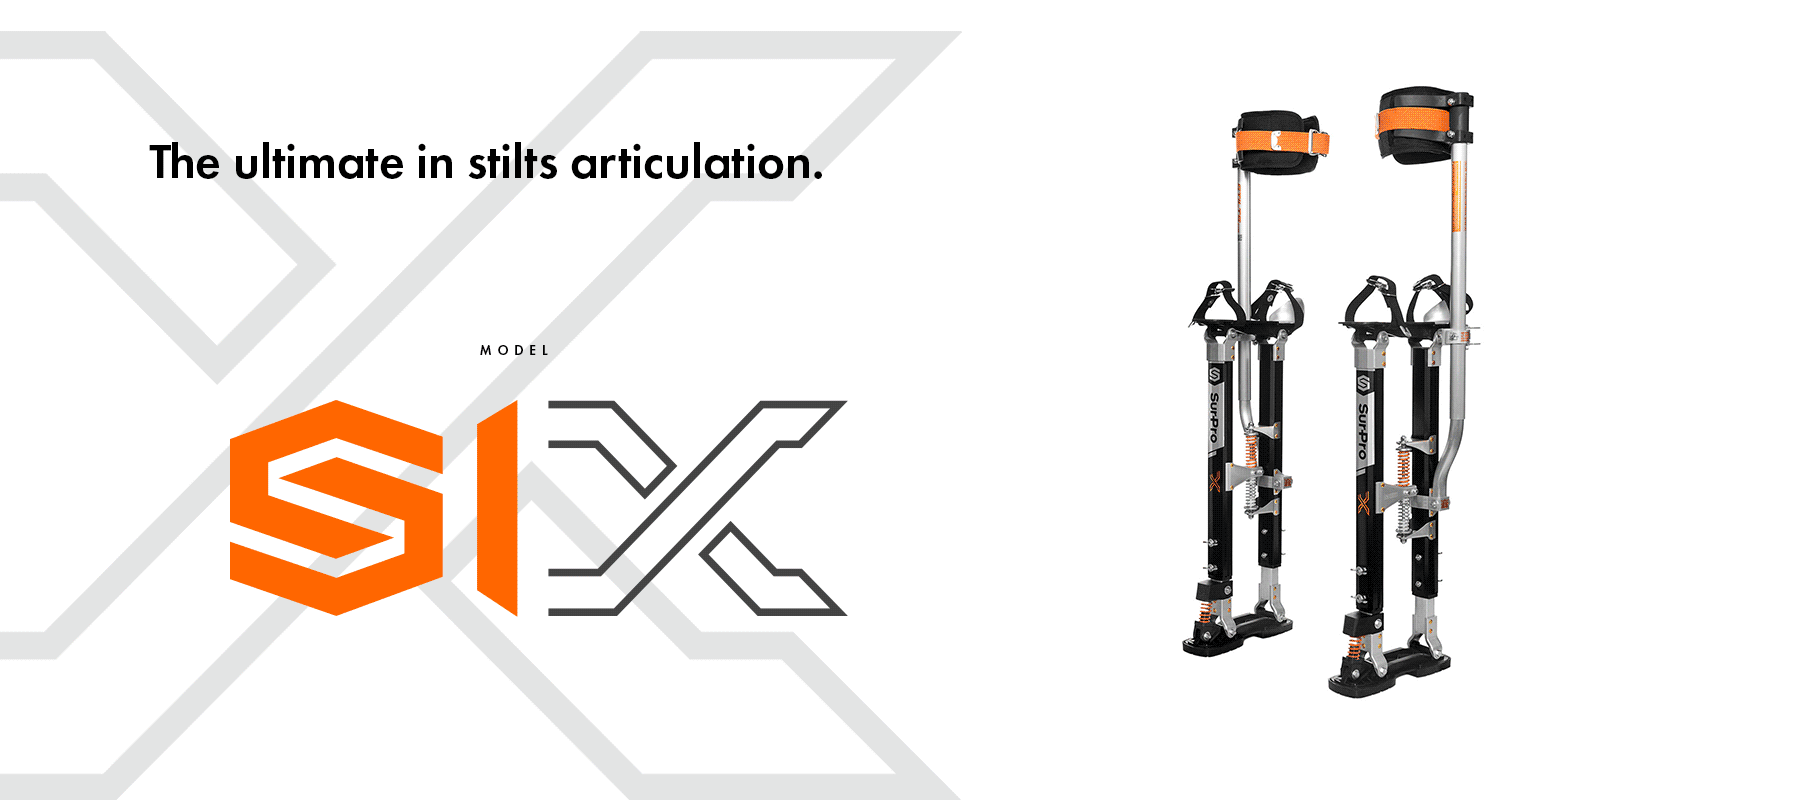 S1X Stilts provide the ultimate in stilts articulation